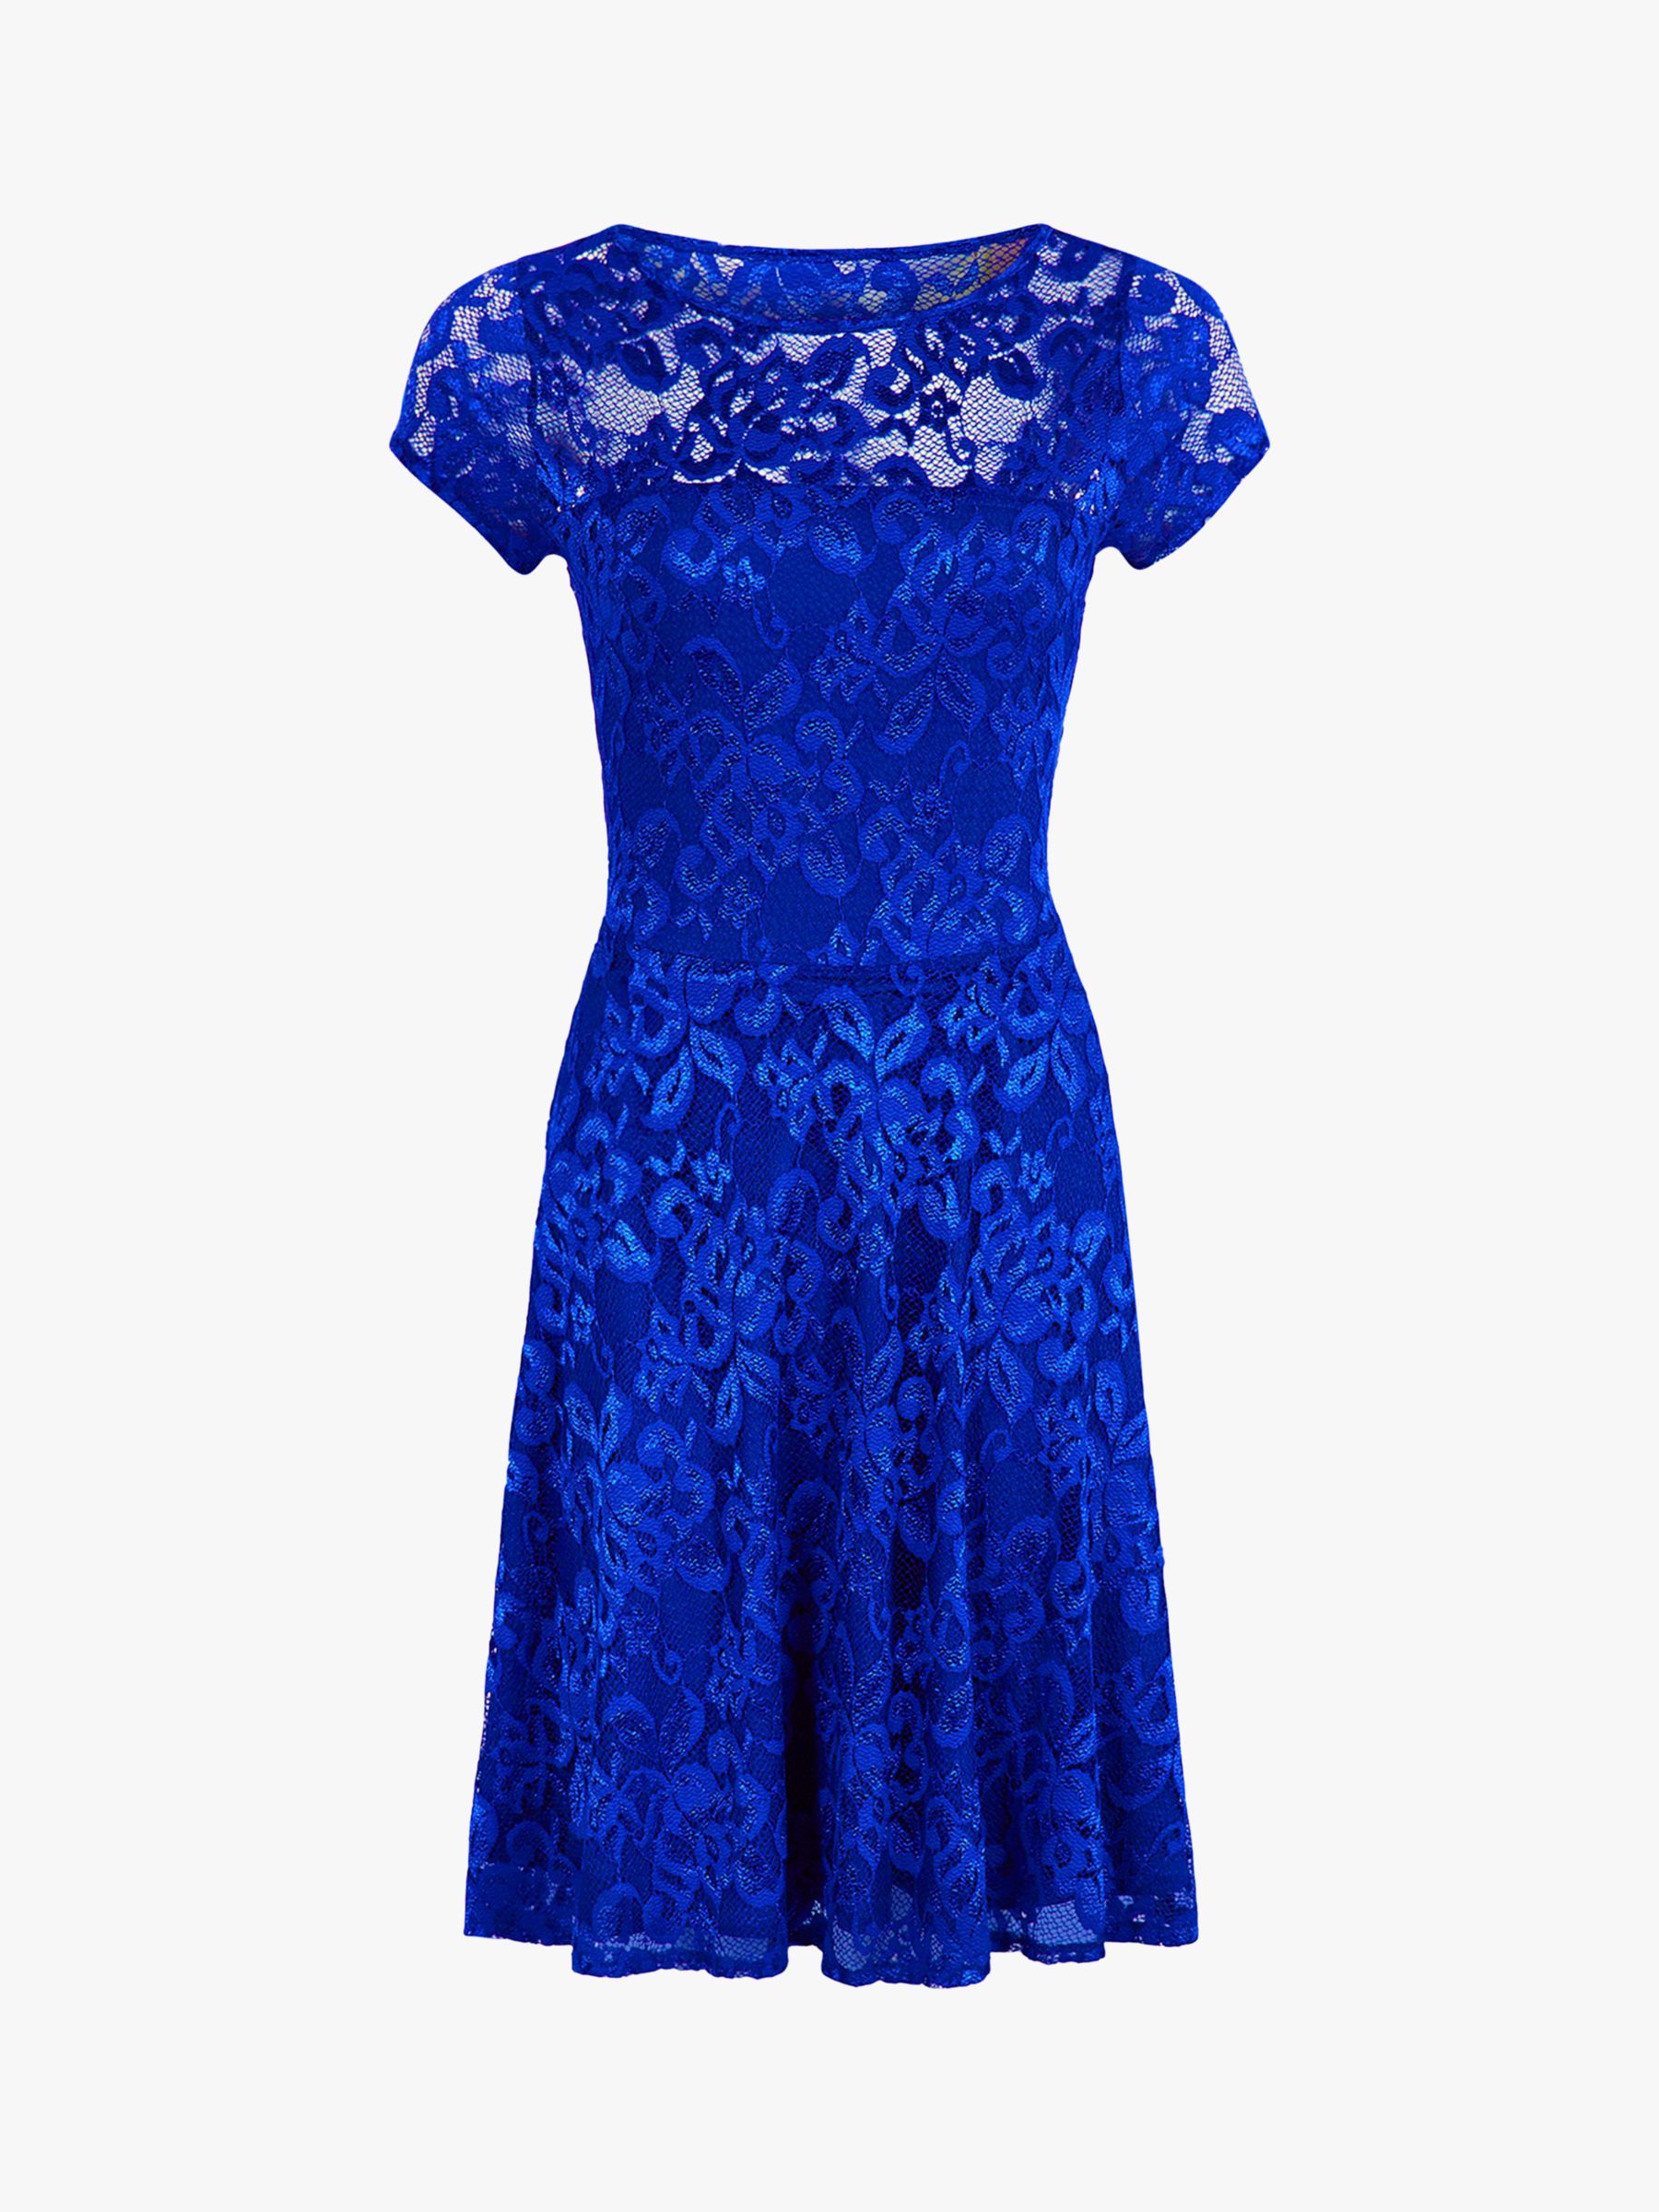 HotSquash Lace Skater Dress, Royal Blue, 8